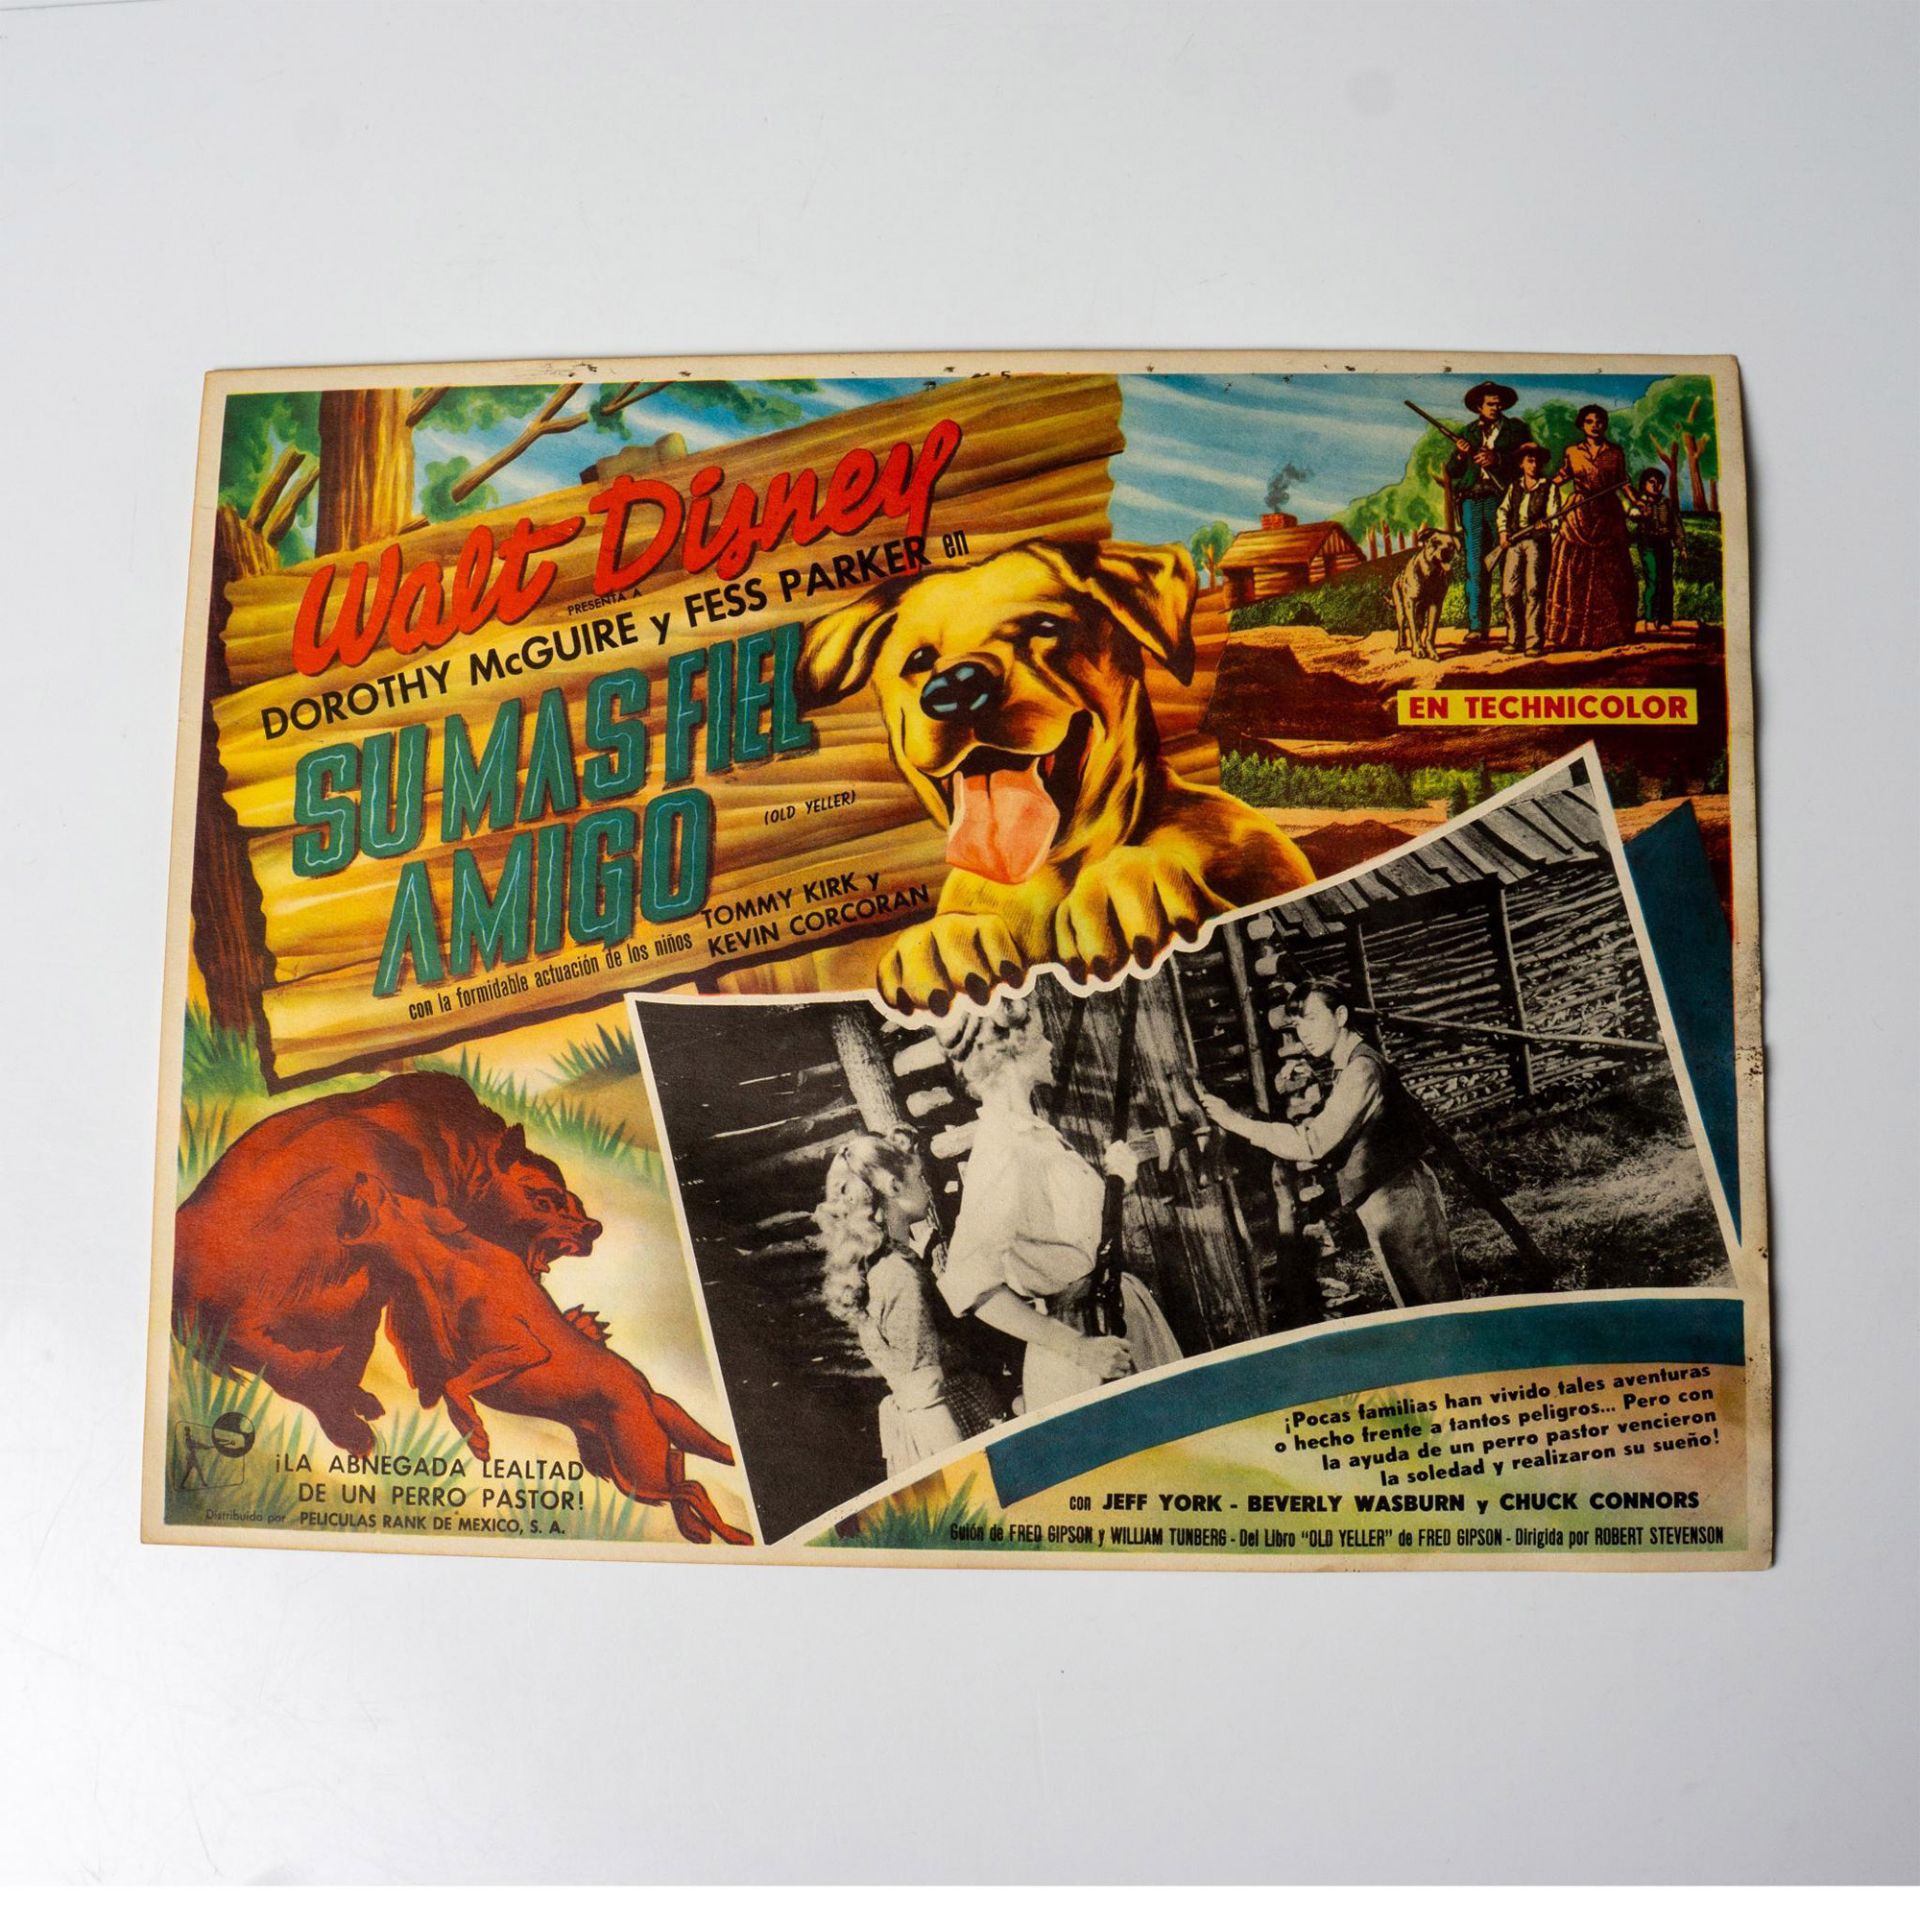 Original Walt Disney Spanish Color Lithograph Movie Poster, Old Yeller - Image 2 of 2